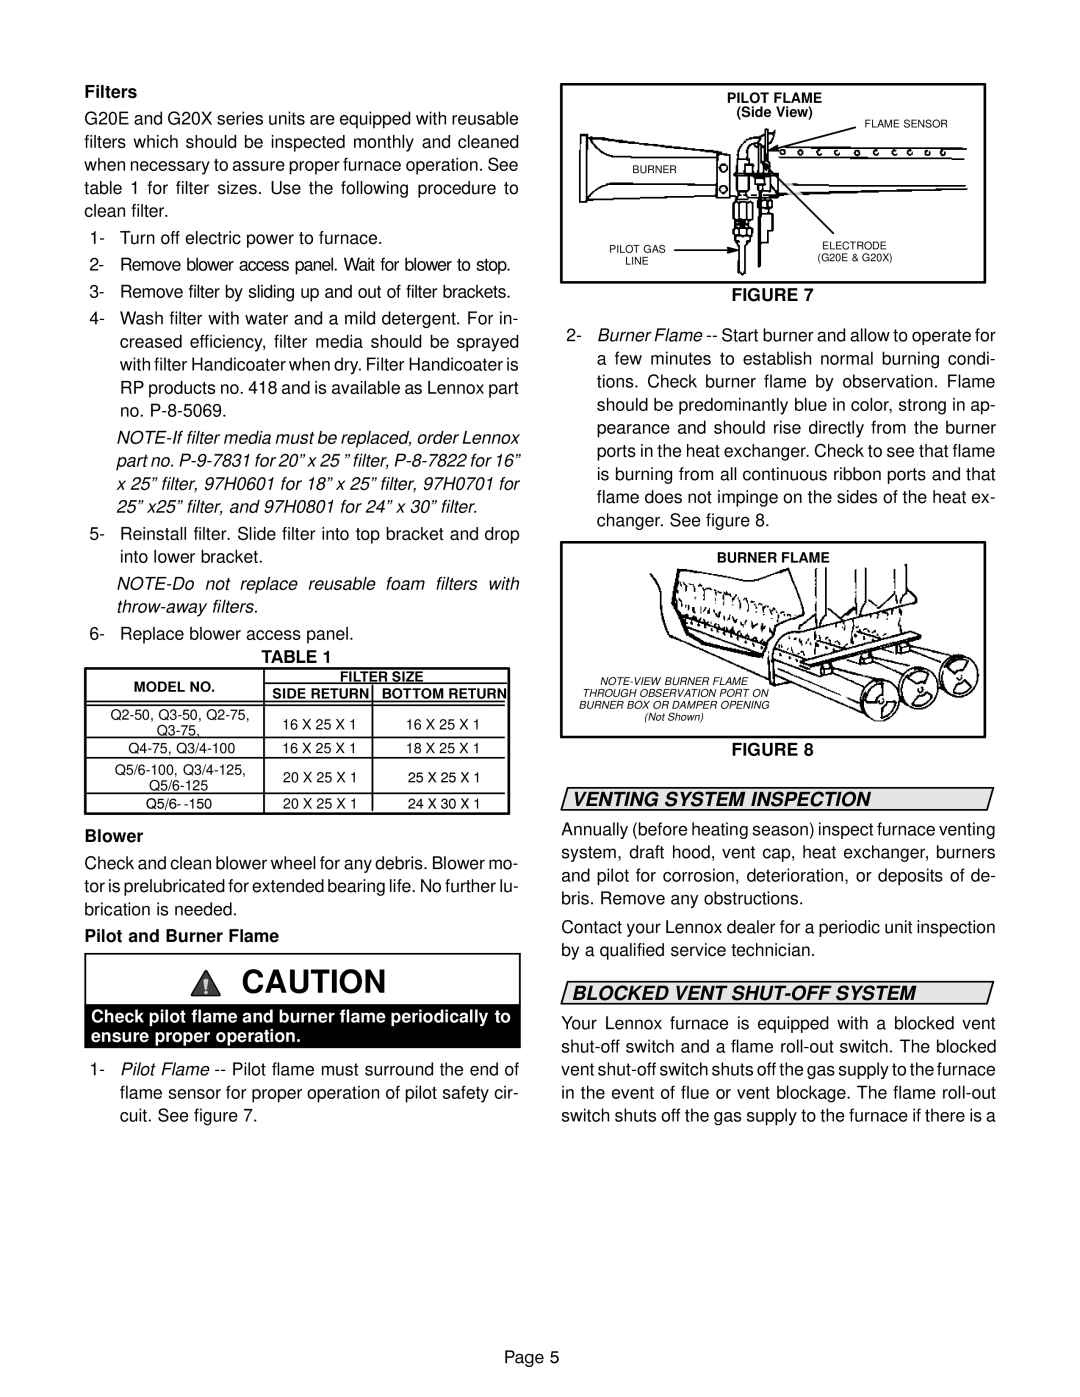 Lennox International Inc G20 manual 3DJH, Venting System Inspection, Blocked Vent Shut-Offsystem 